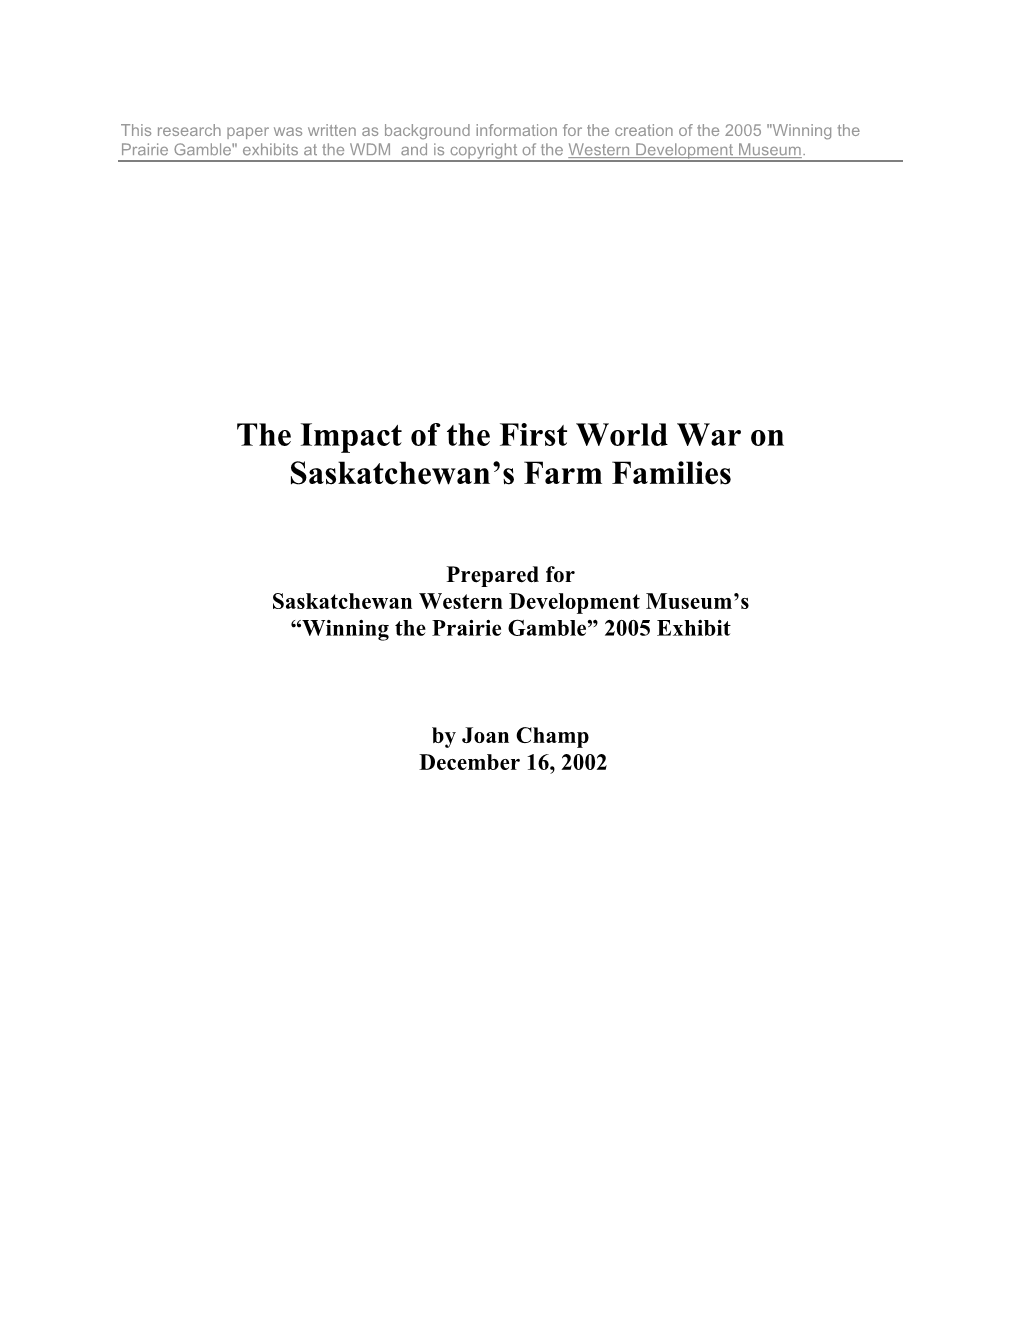 The Impact of the First World War on Saskatchewan's Farm Families